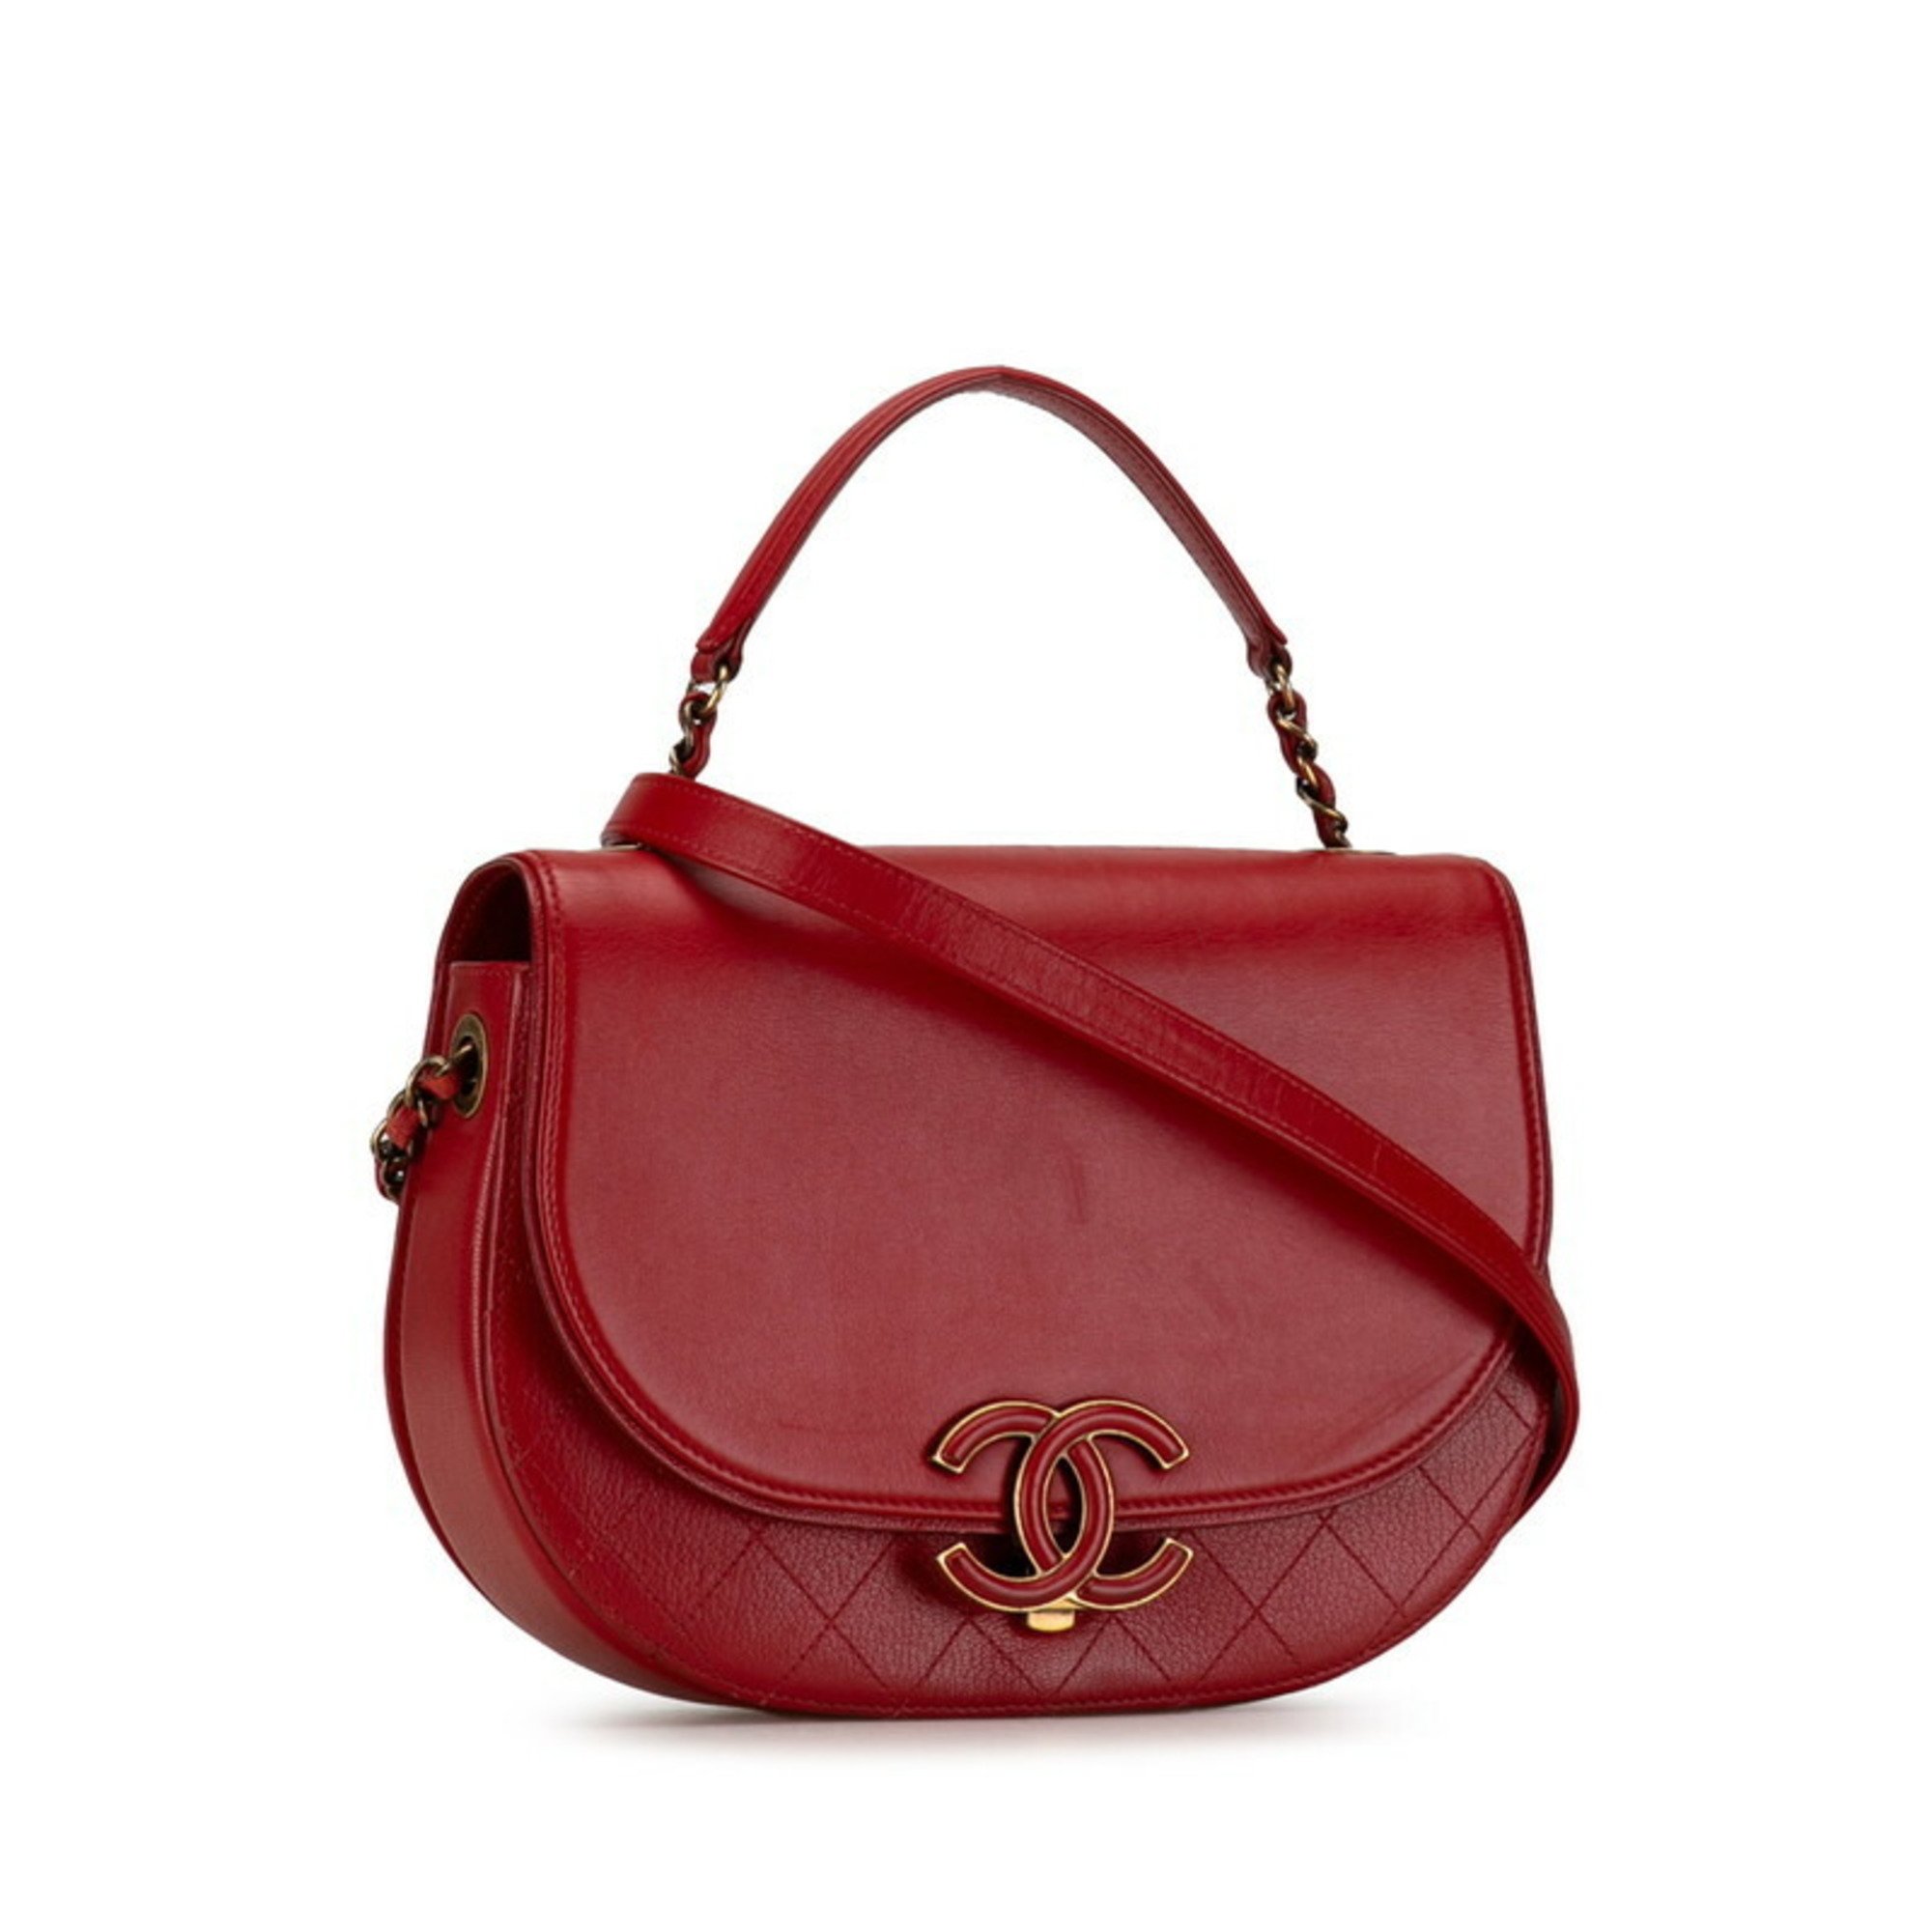 Chanel Coco Mark Handbag Shoulder Bag Red Leather Women's CHANEL